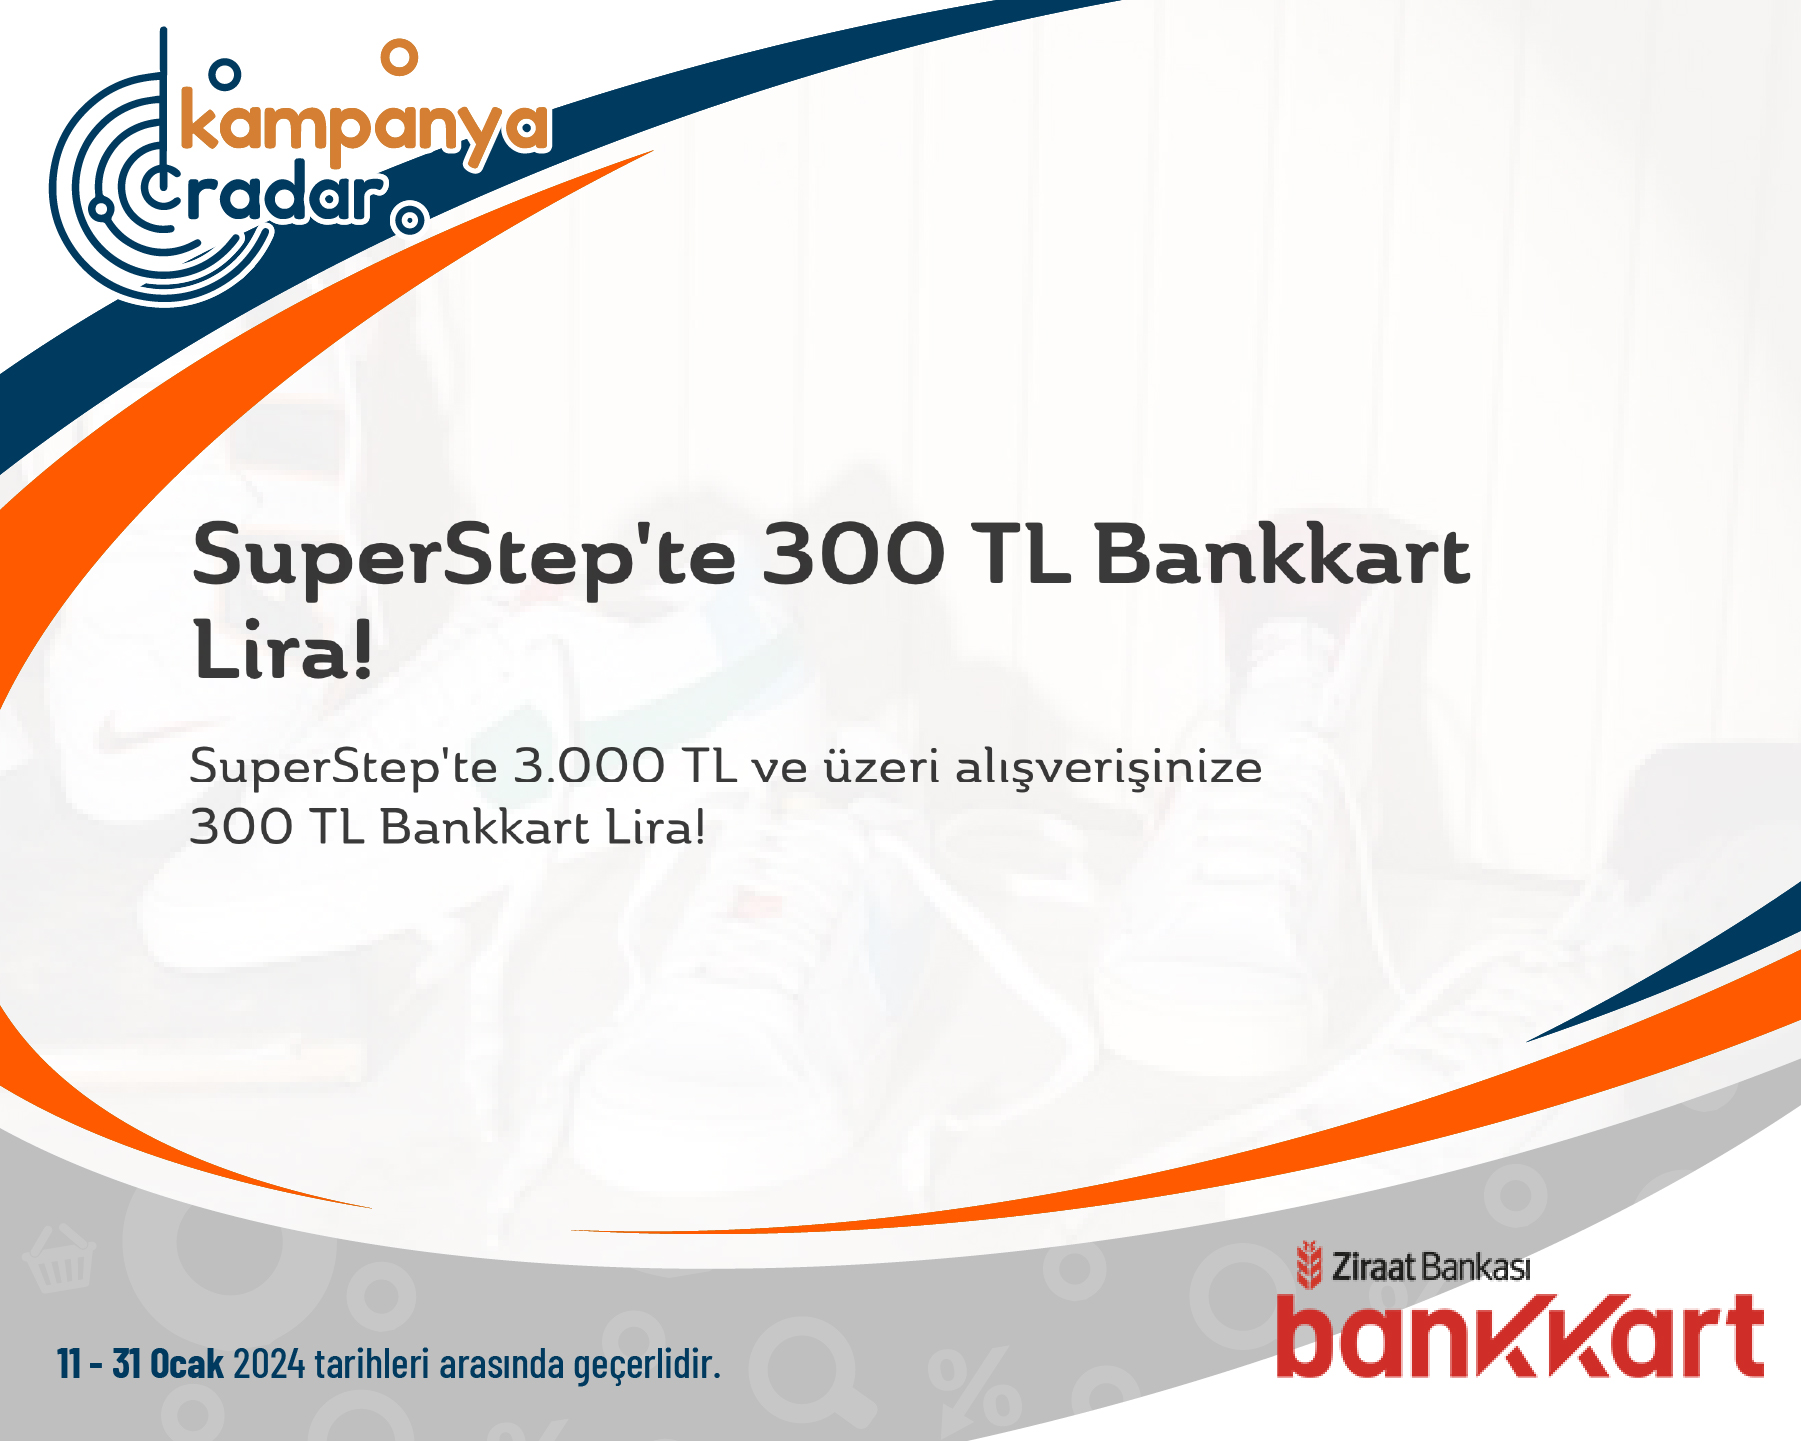 Bankkart SuperStep'te 300 TL Bankkart Lira!